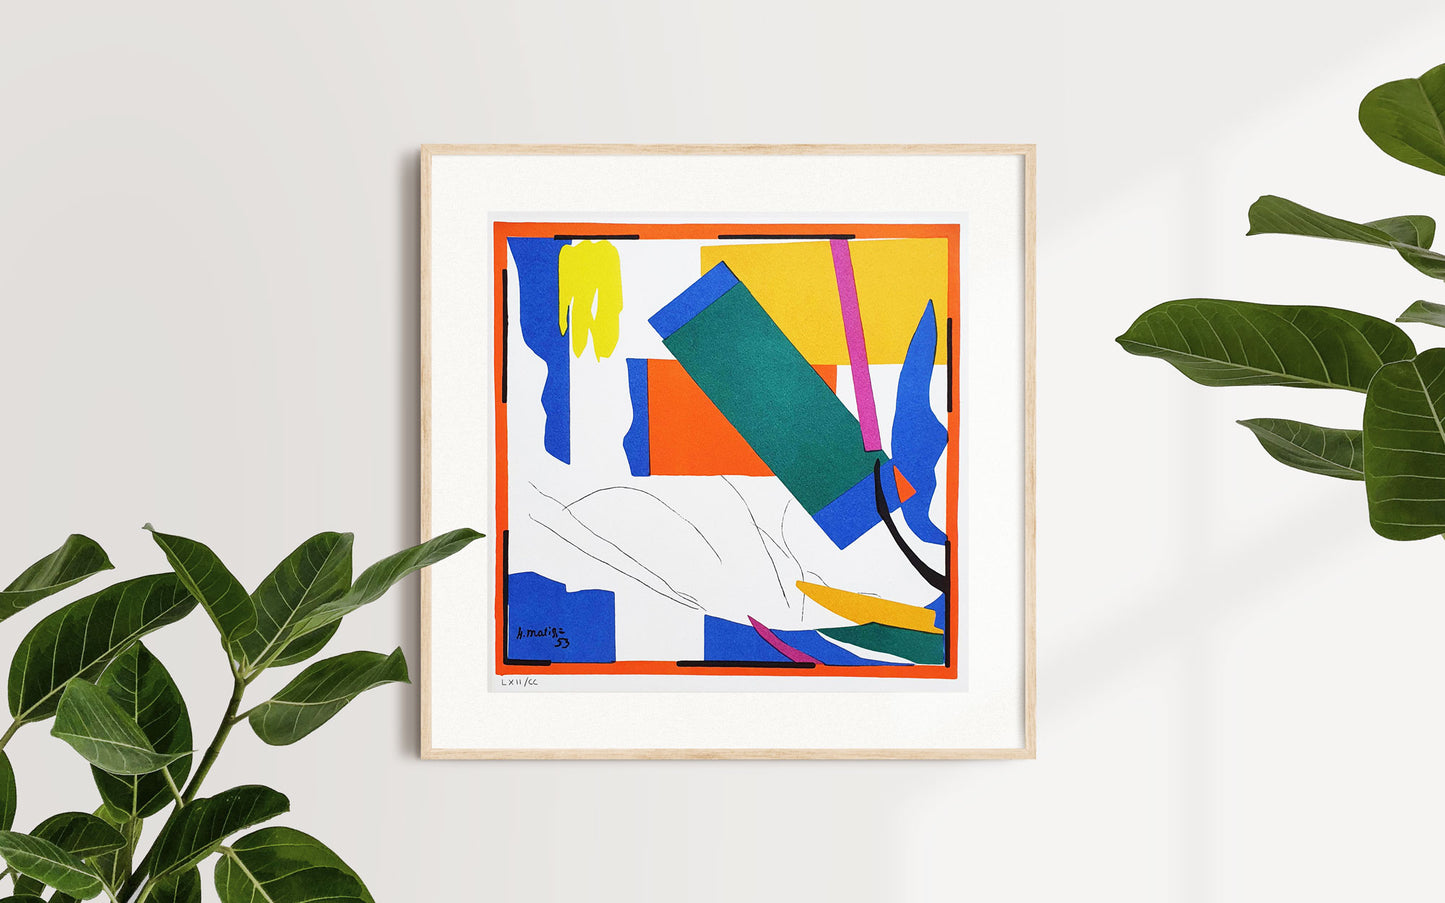 Henri Matisse - Souvenir d’Océanie (1979)